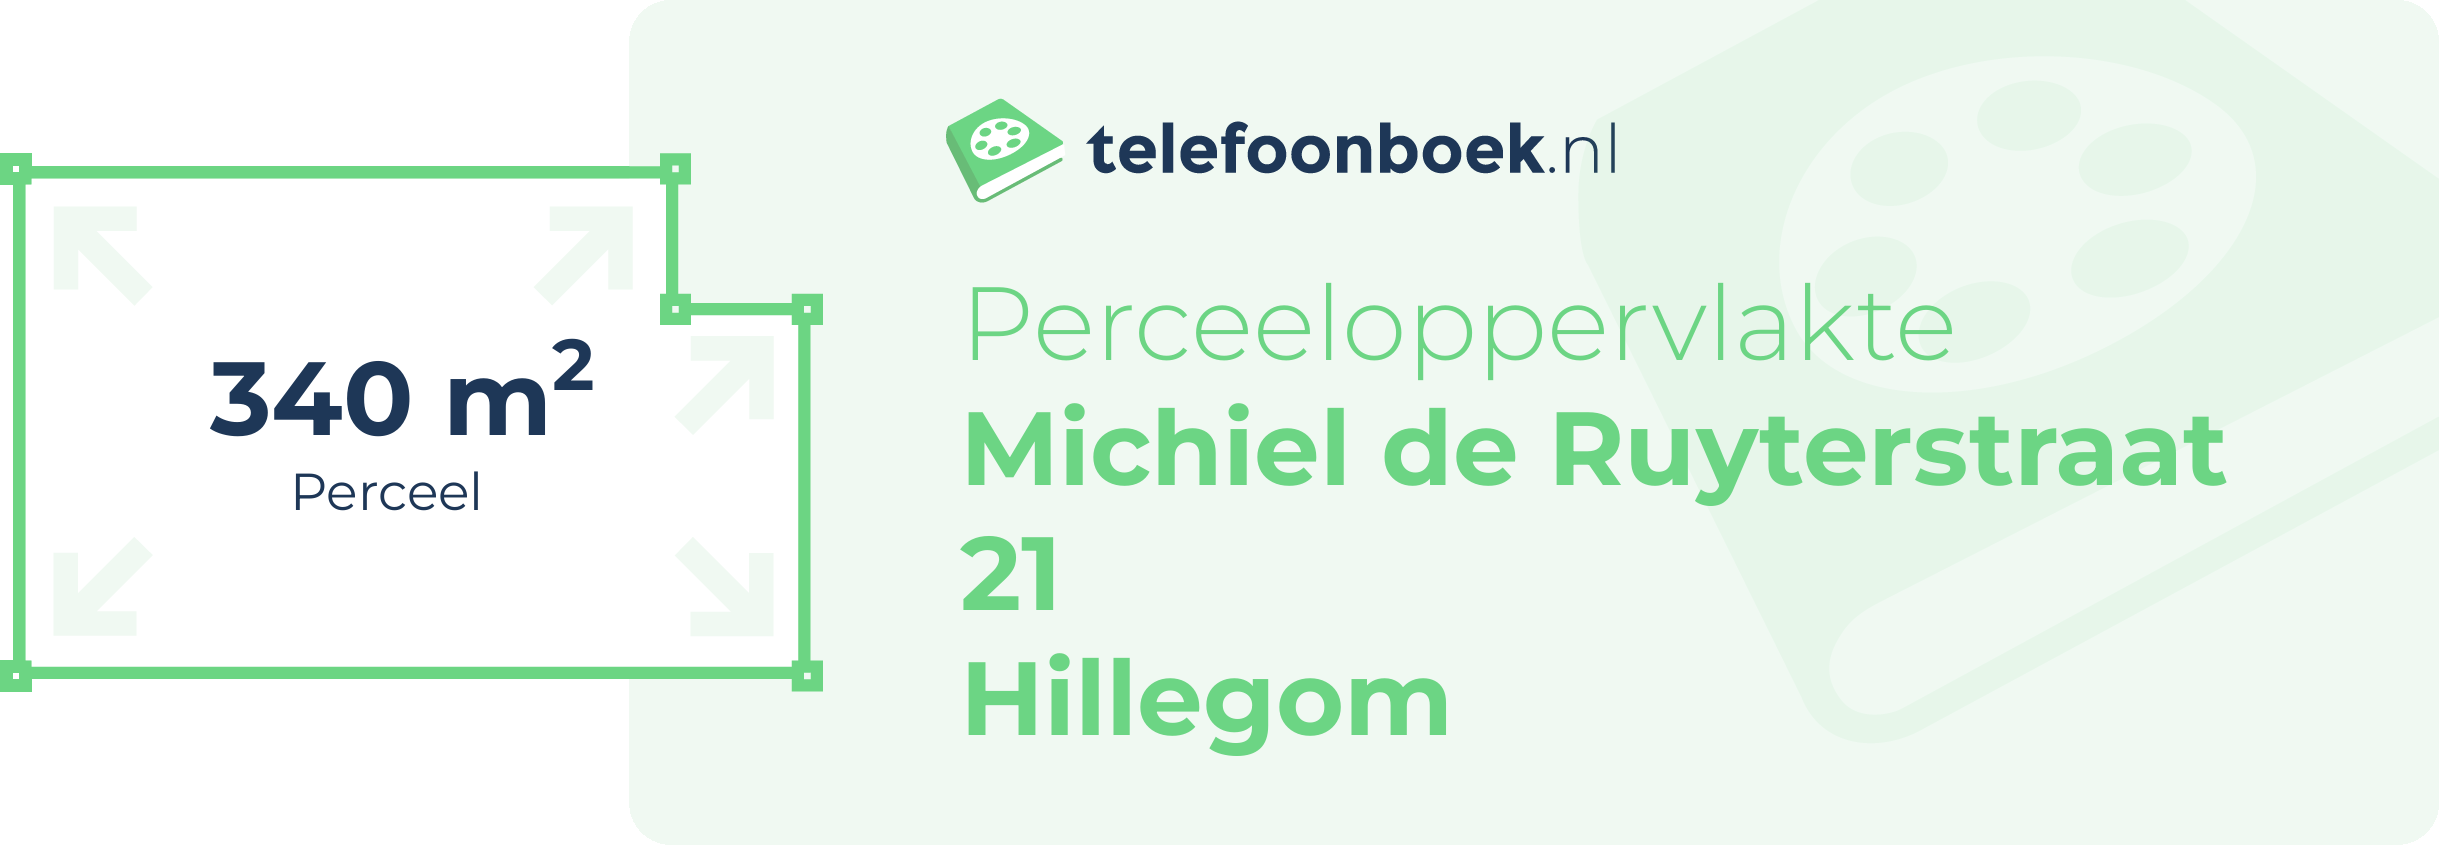 Perceeloppervlakte Michiel De Ruyterstraat 21 Hillegom